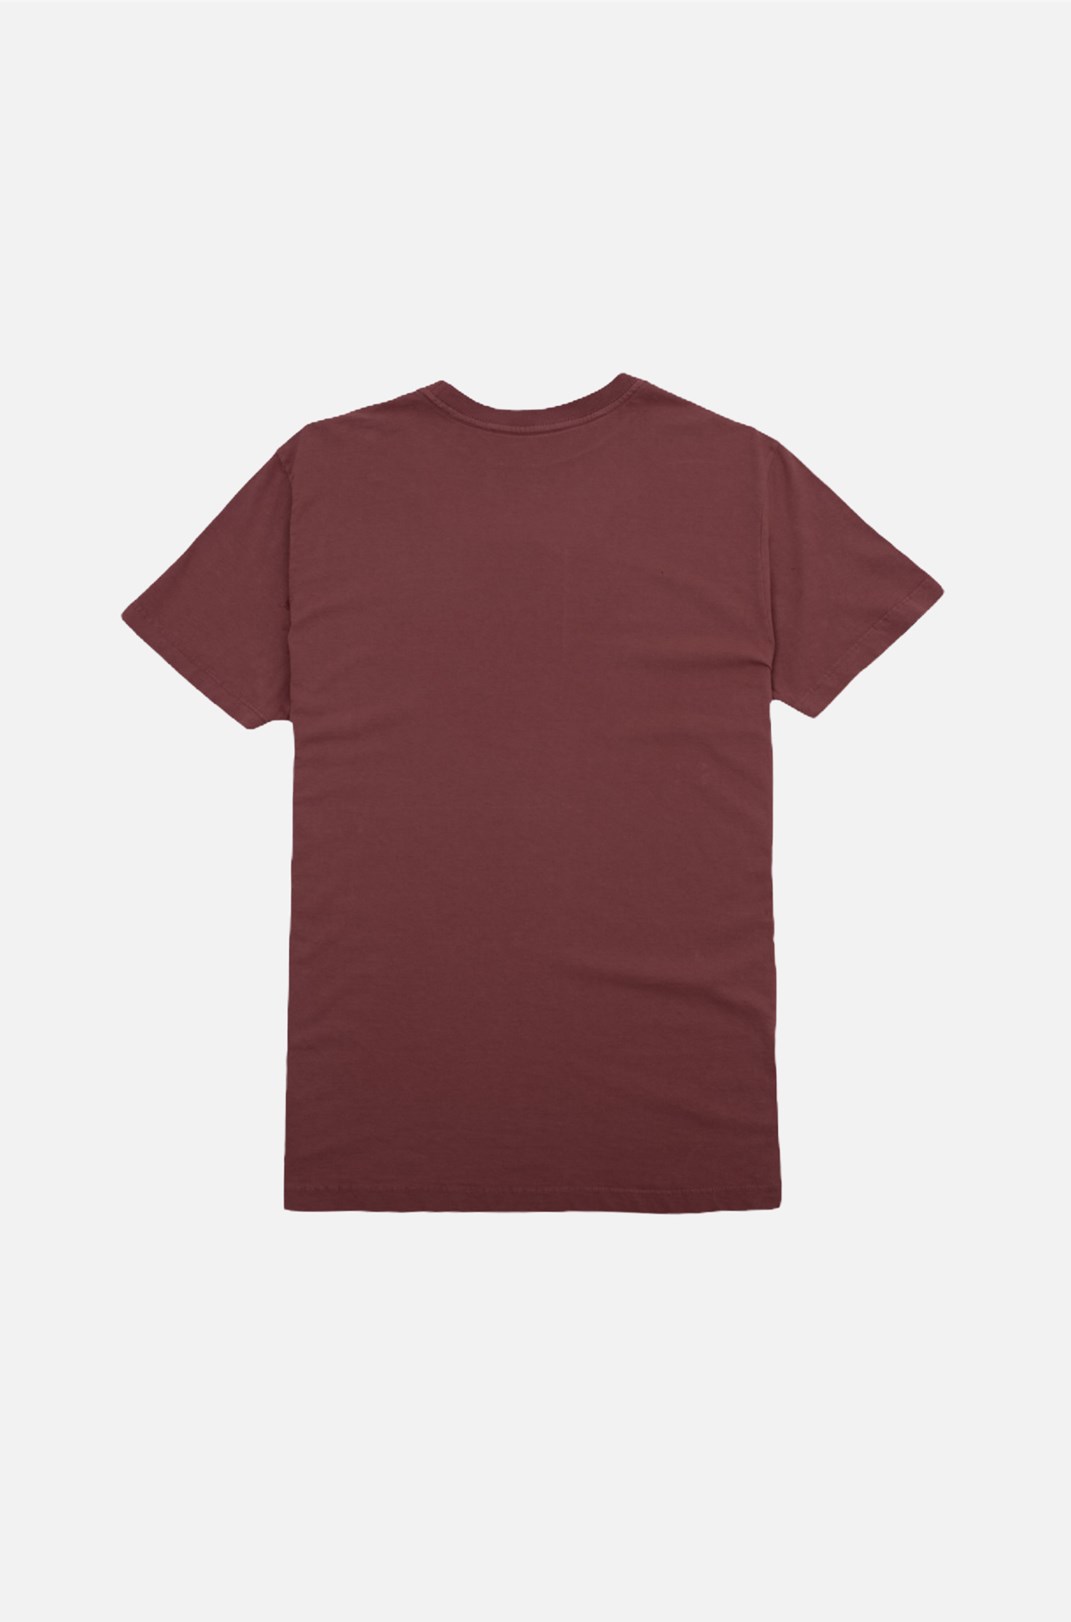 Camiseta Regular Approve Monochromatic Marrom V2